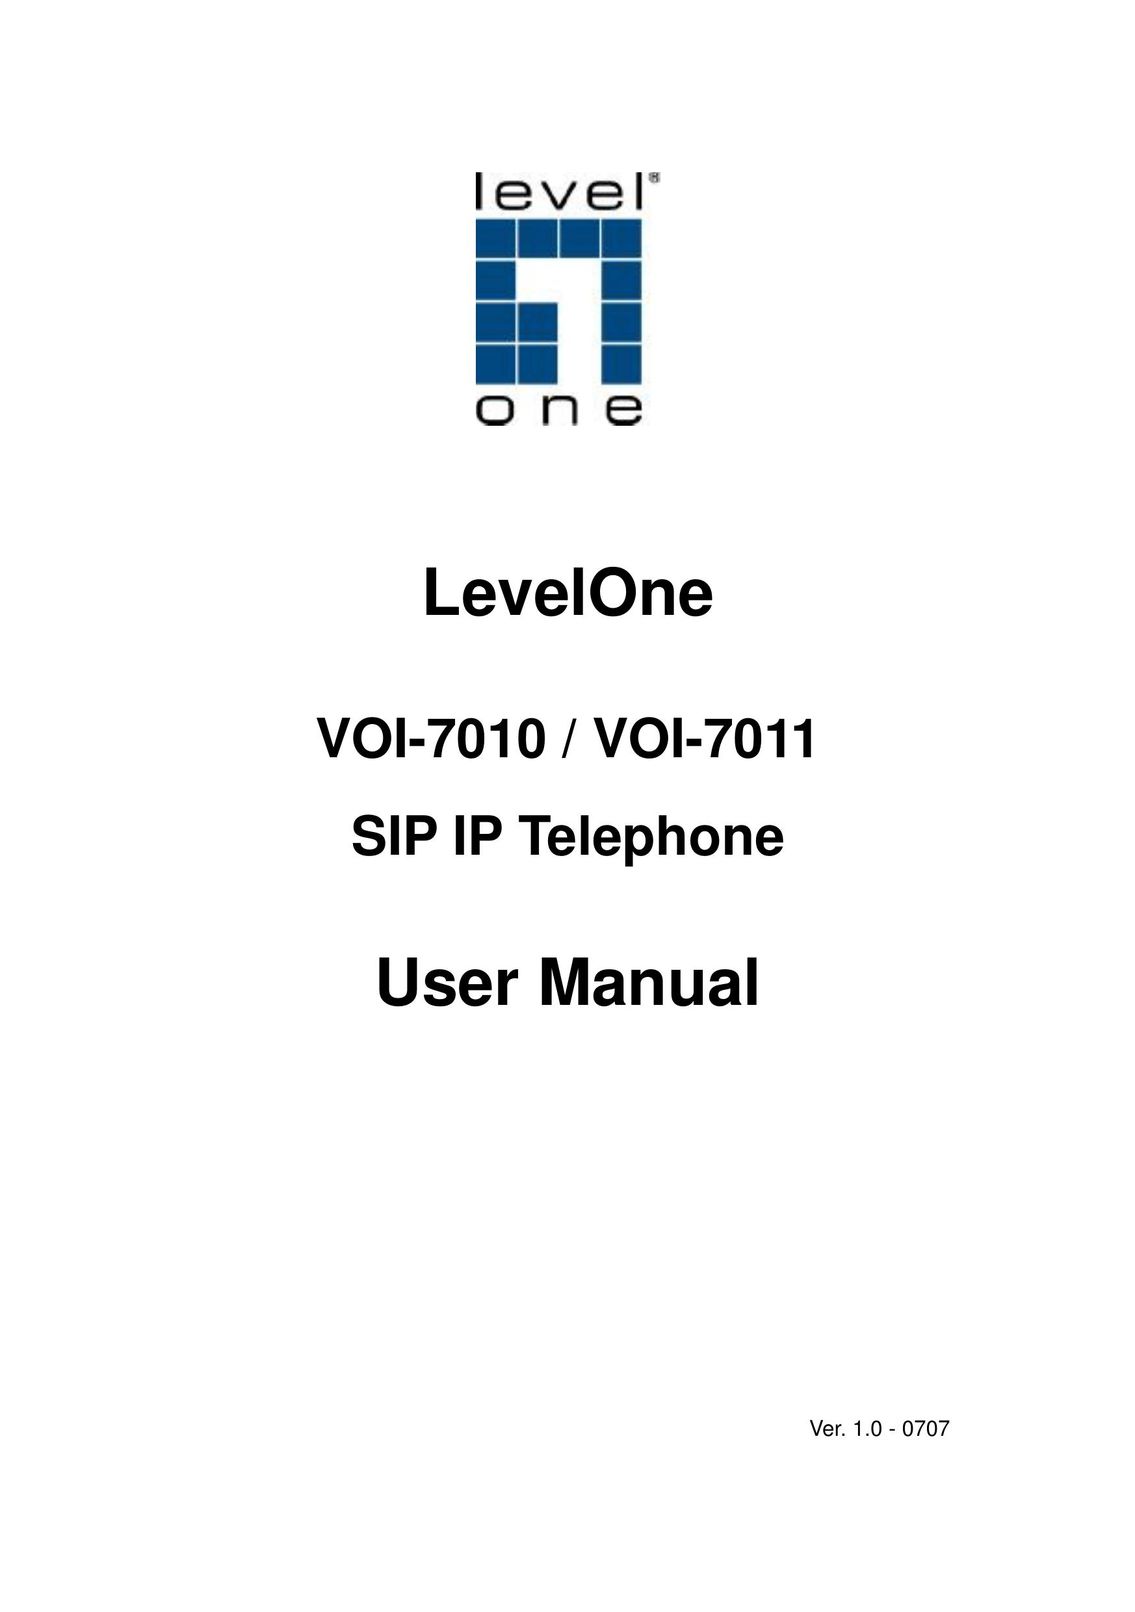 LevelOne VOI-7011 IP Phone User Manual